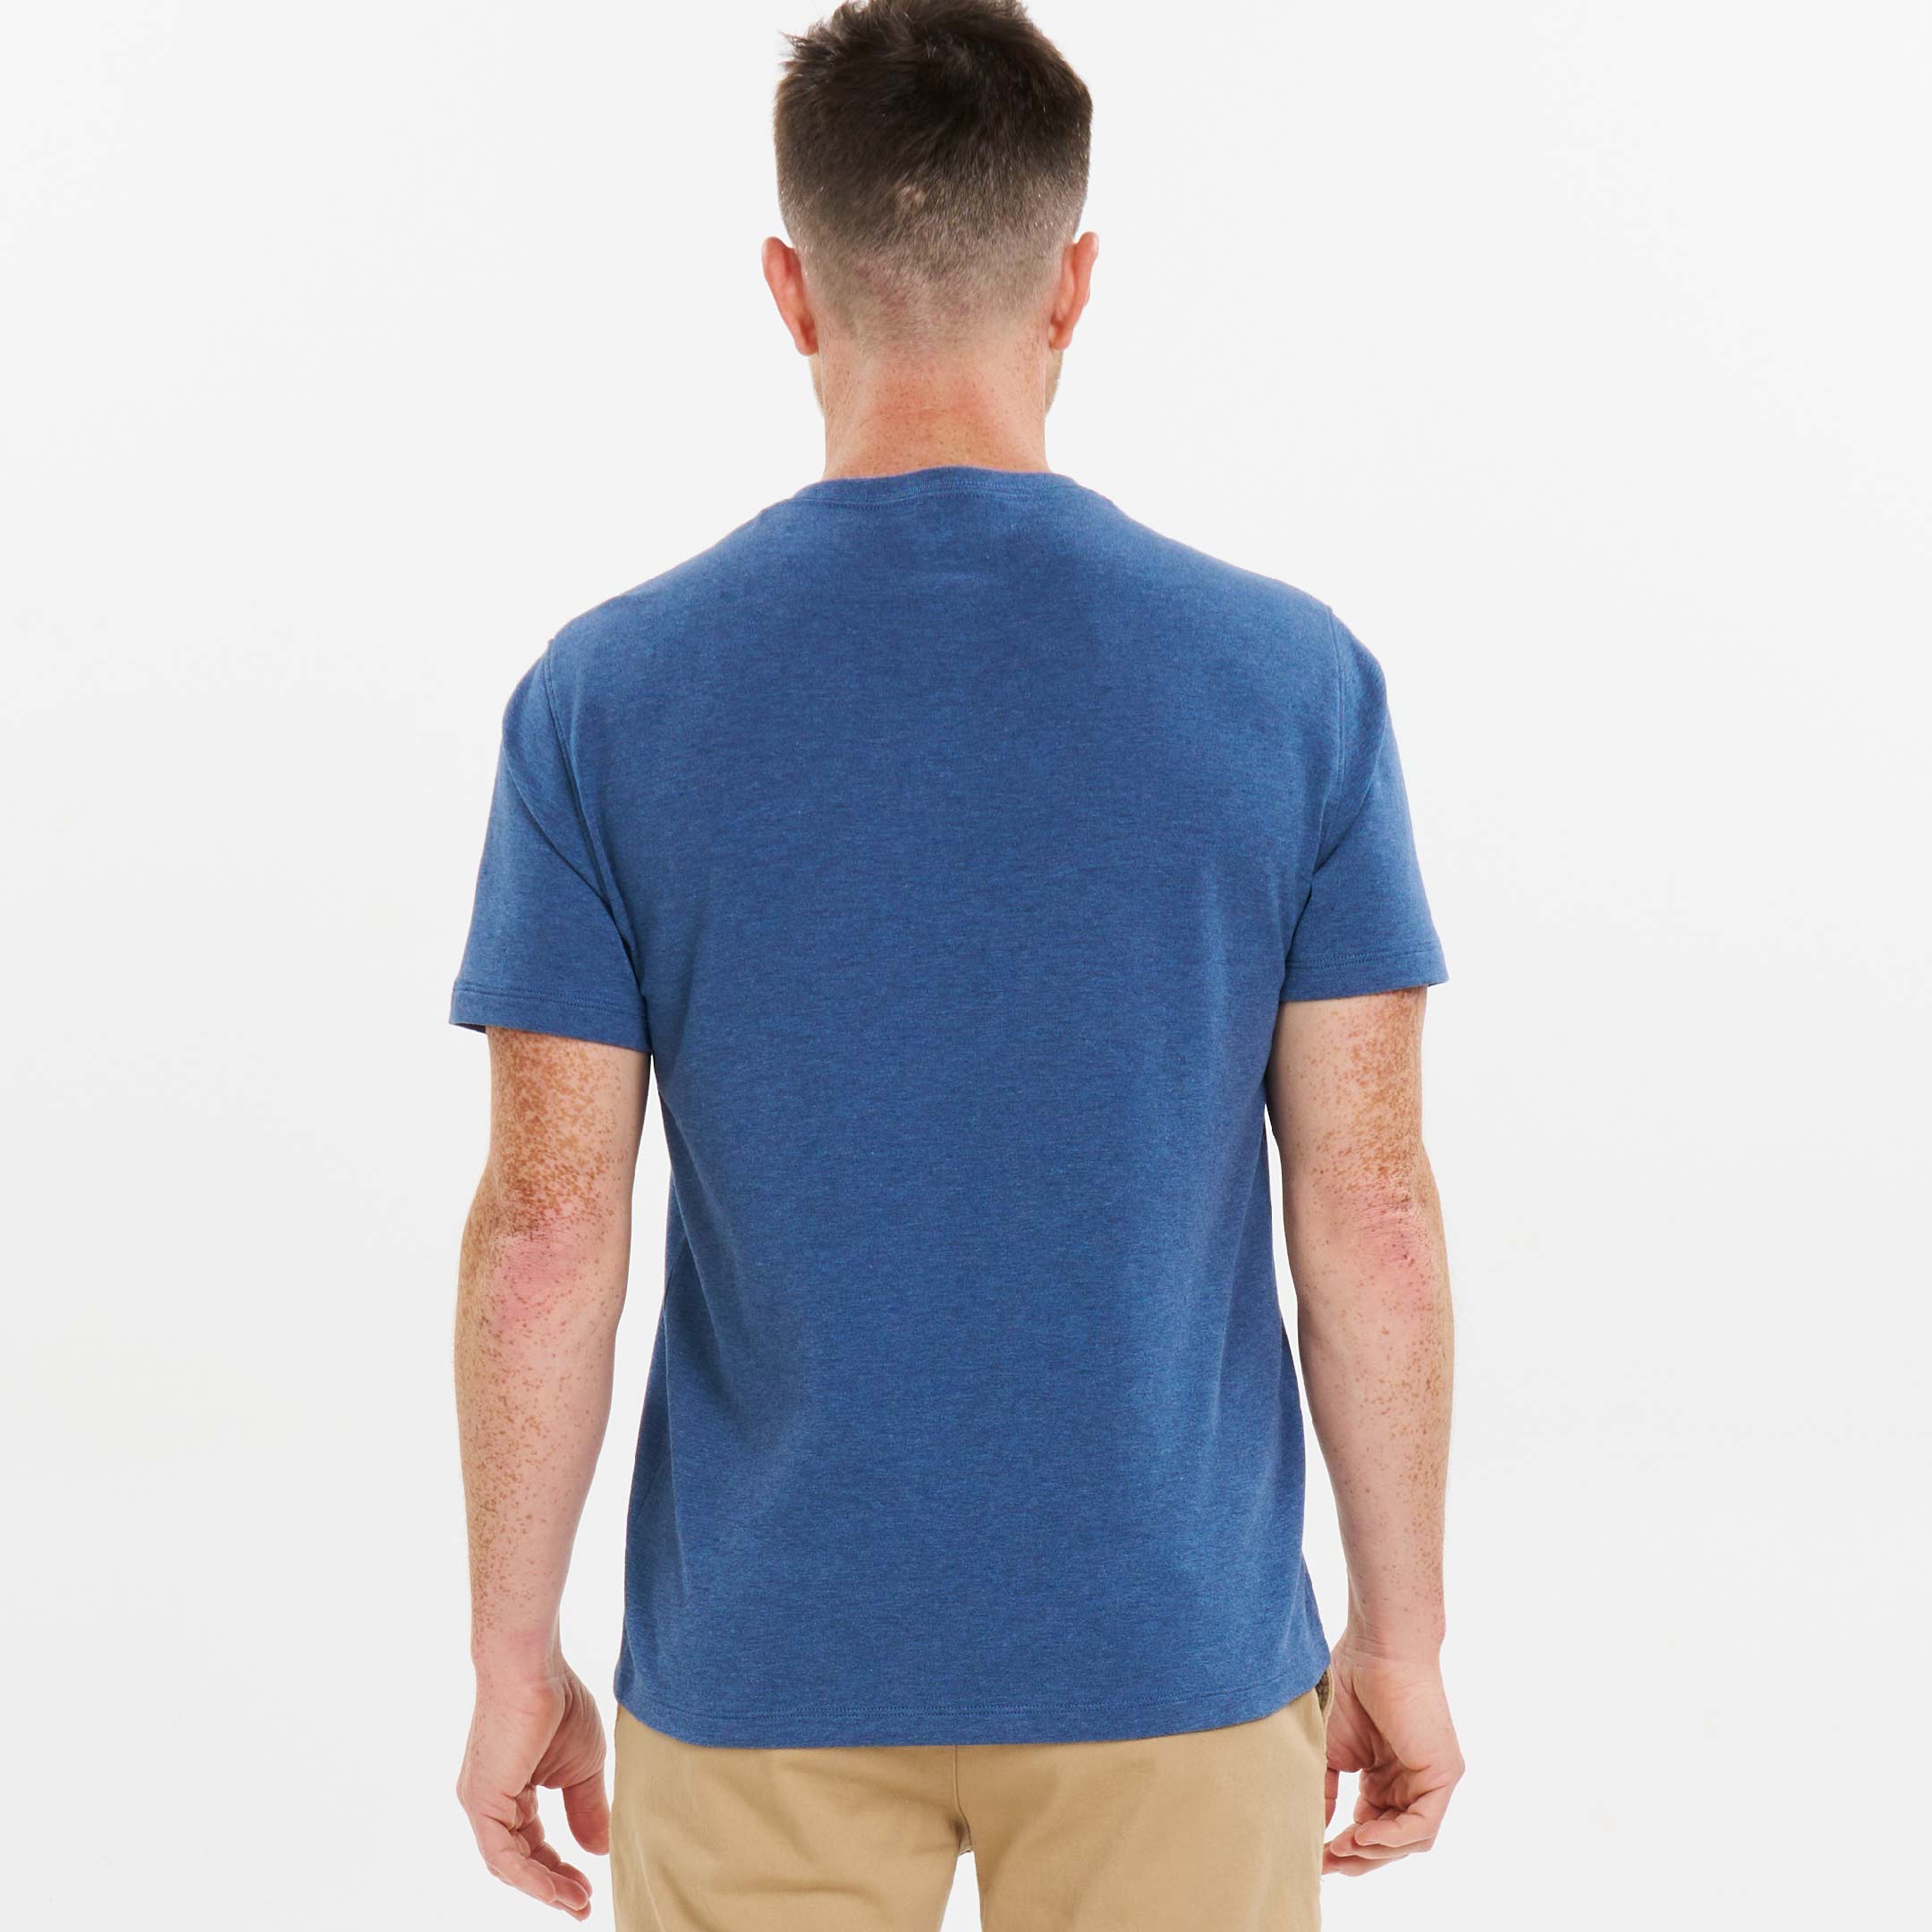 Ash & Erie Heather Blue Luxury Soft Touch Crew Neck T-Shirt for Short Men   Short Sleeve Premium Tee